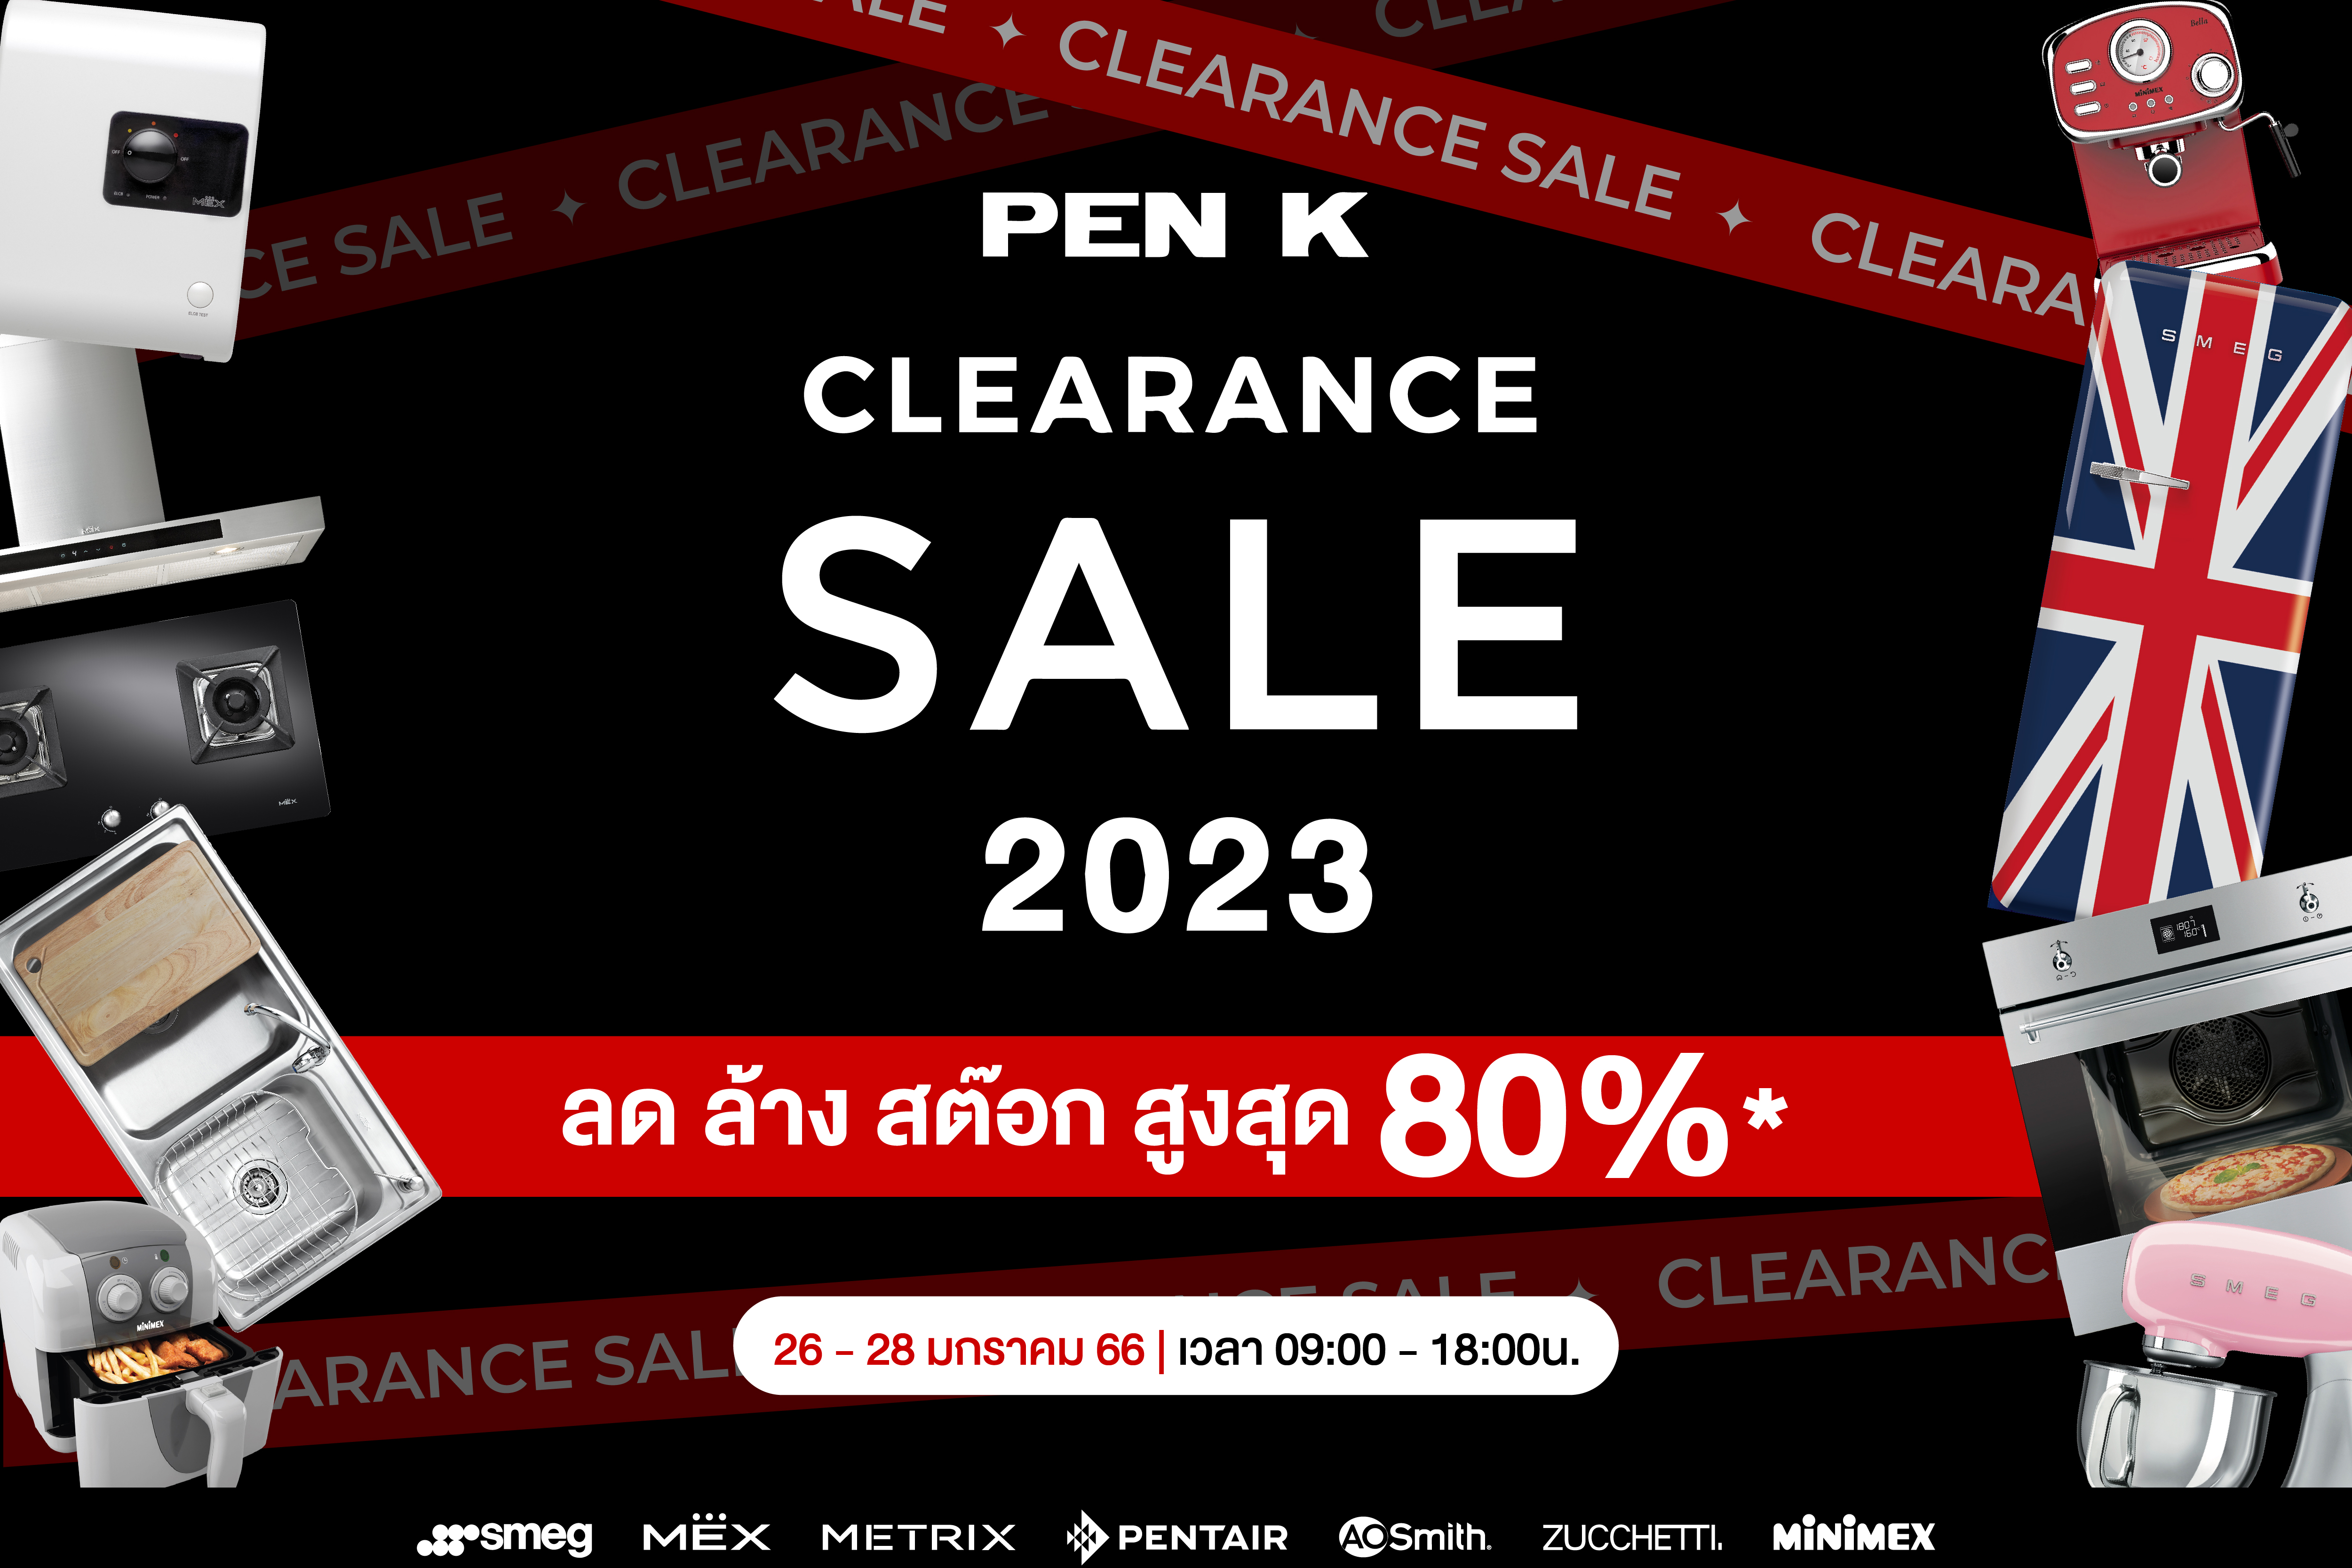 PEN K Clearance Sale 2023